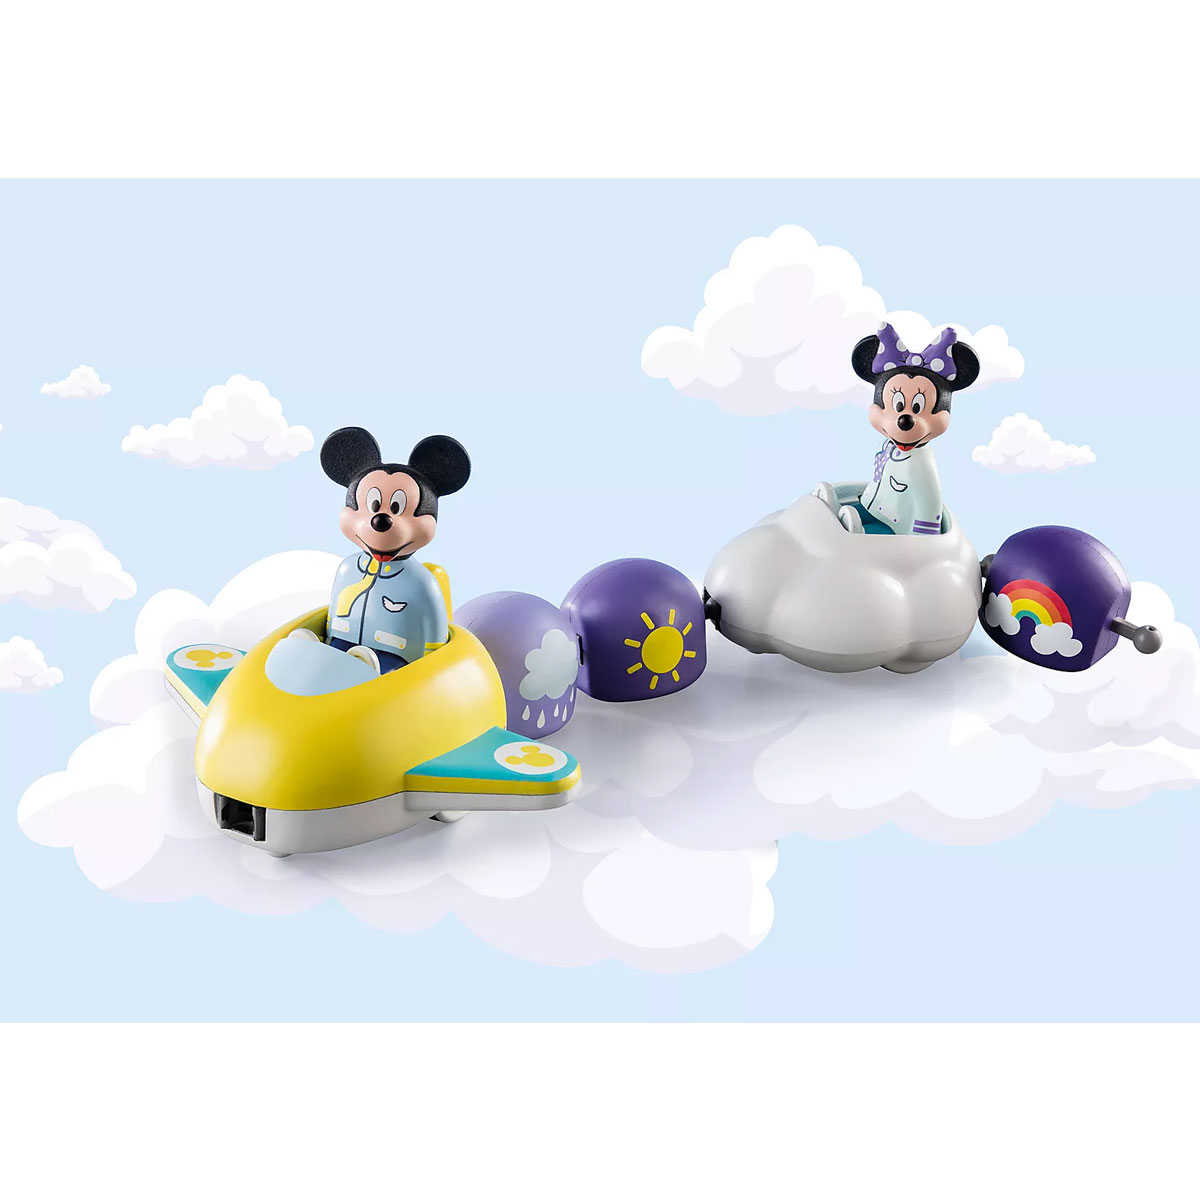 1.2.3 Playmobil Disney | Mickey y Minnie Tren Nube 71320